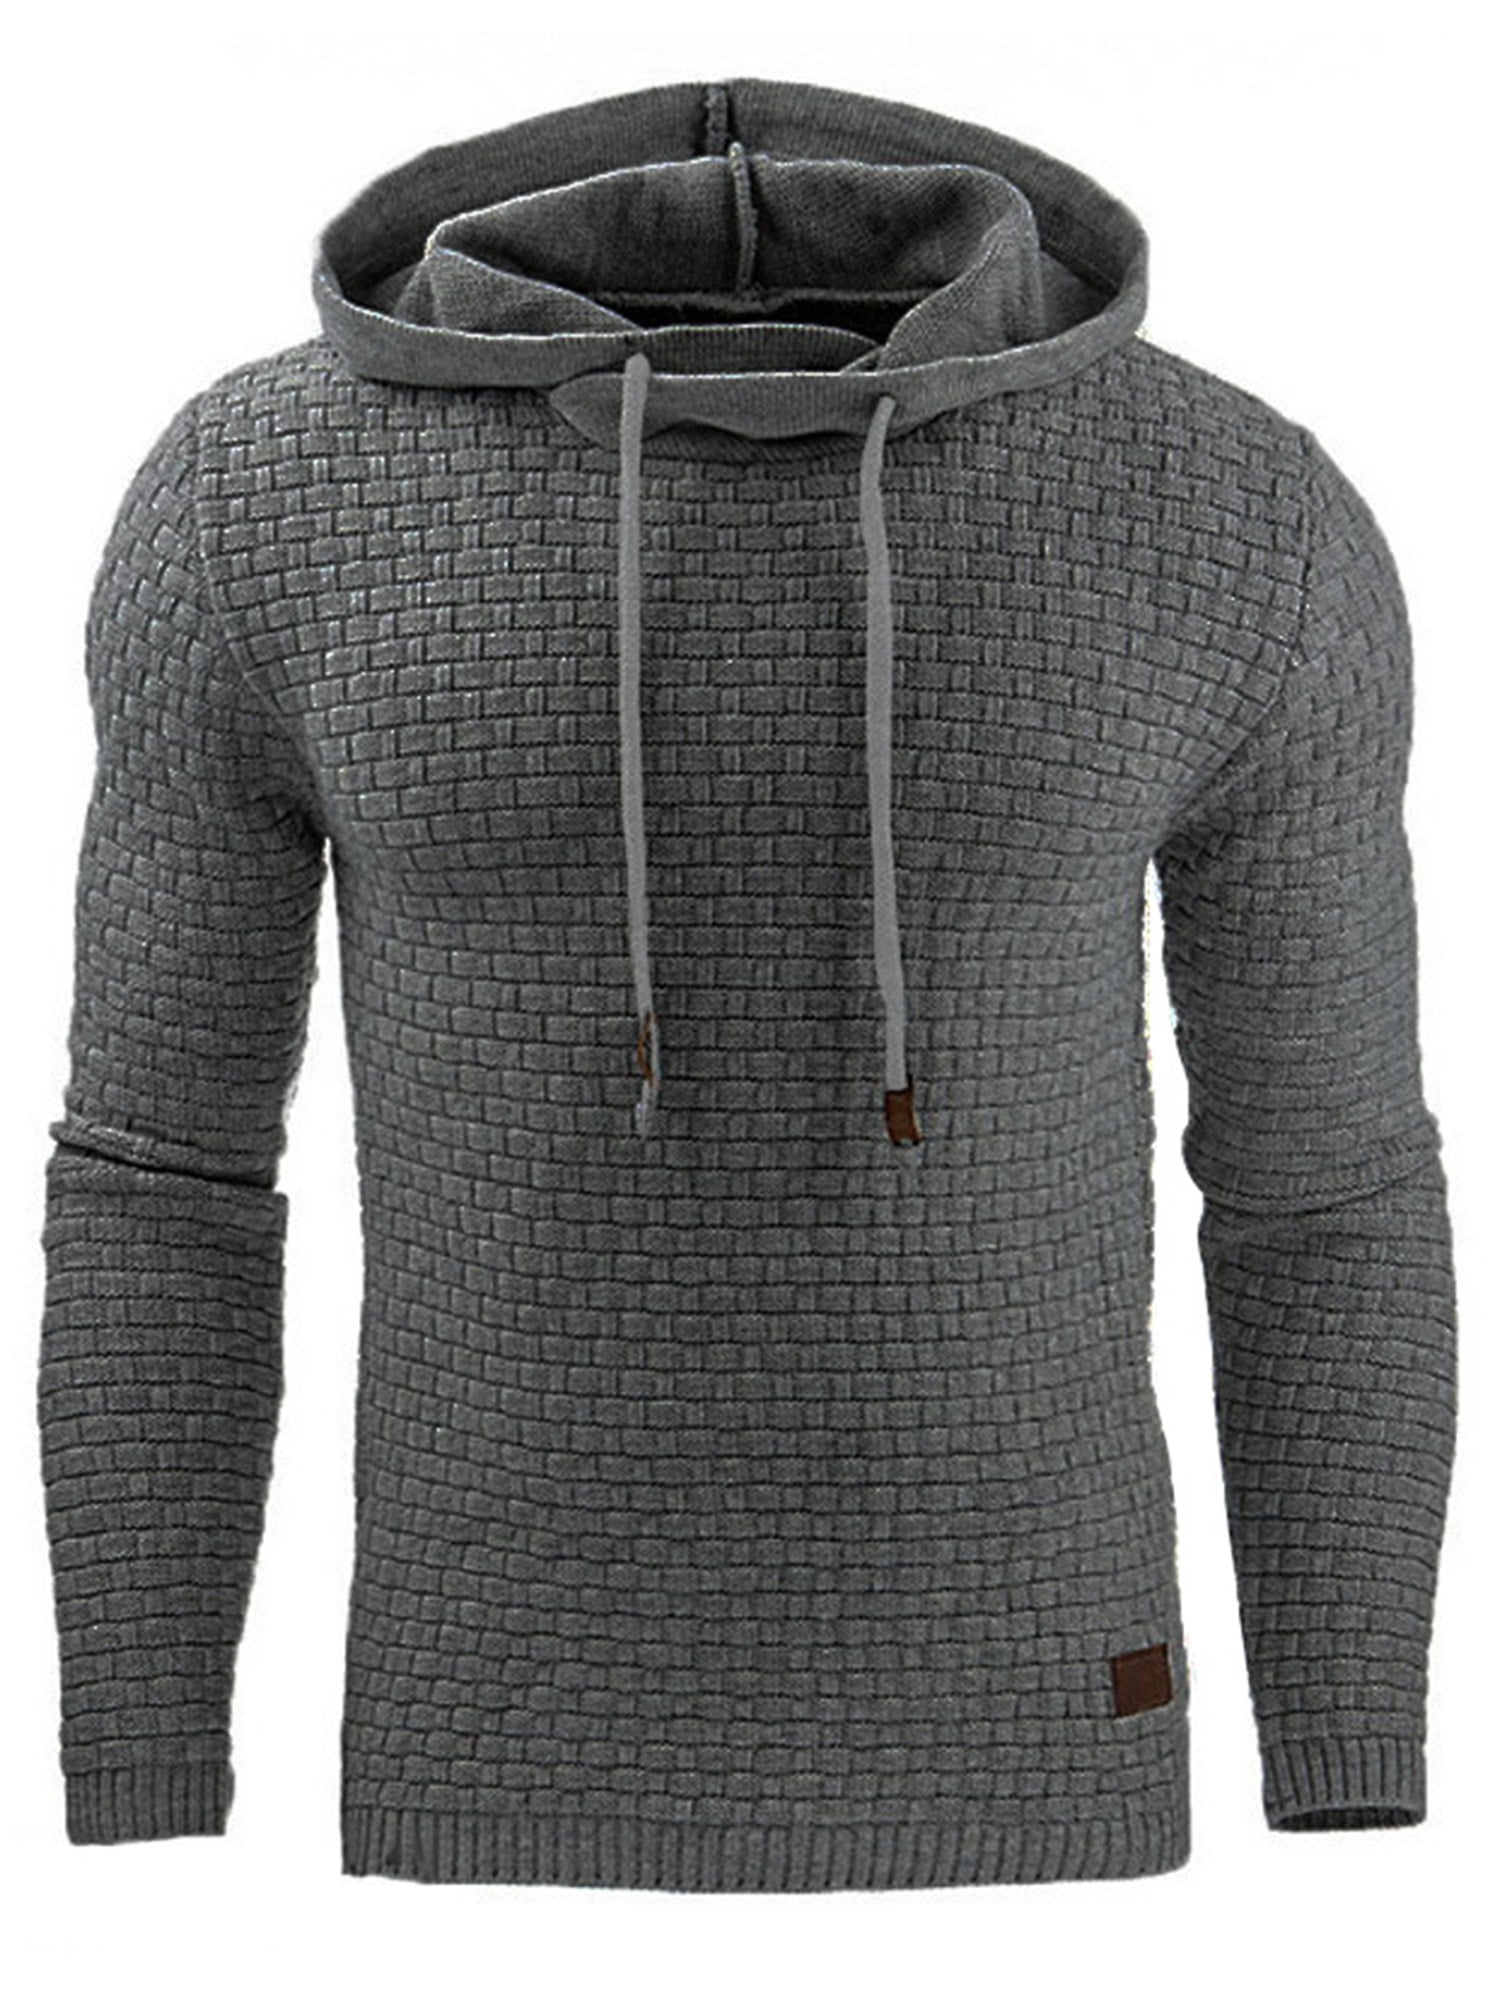 Details about   Men Slim Jacket Warm Hoodie Coat Hooded Sweatshirt Outwear Autumn Short Tops 